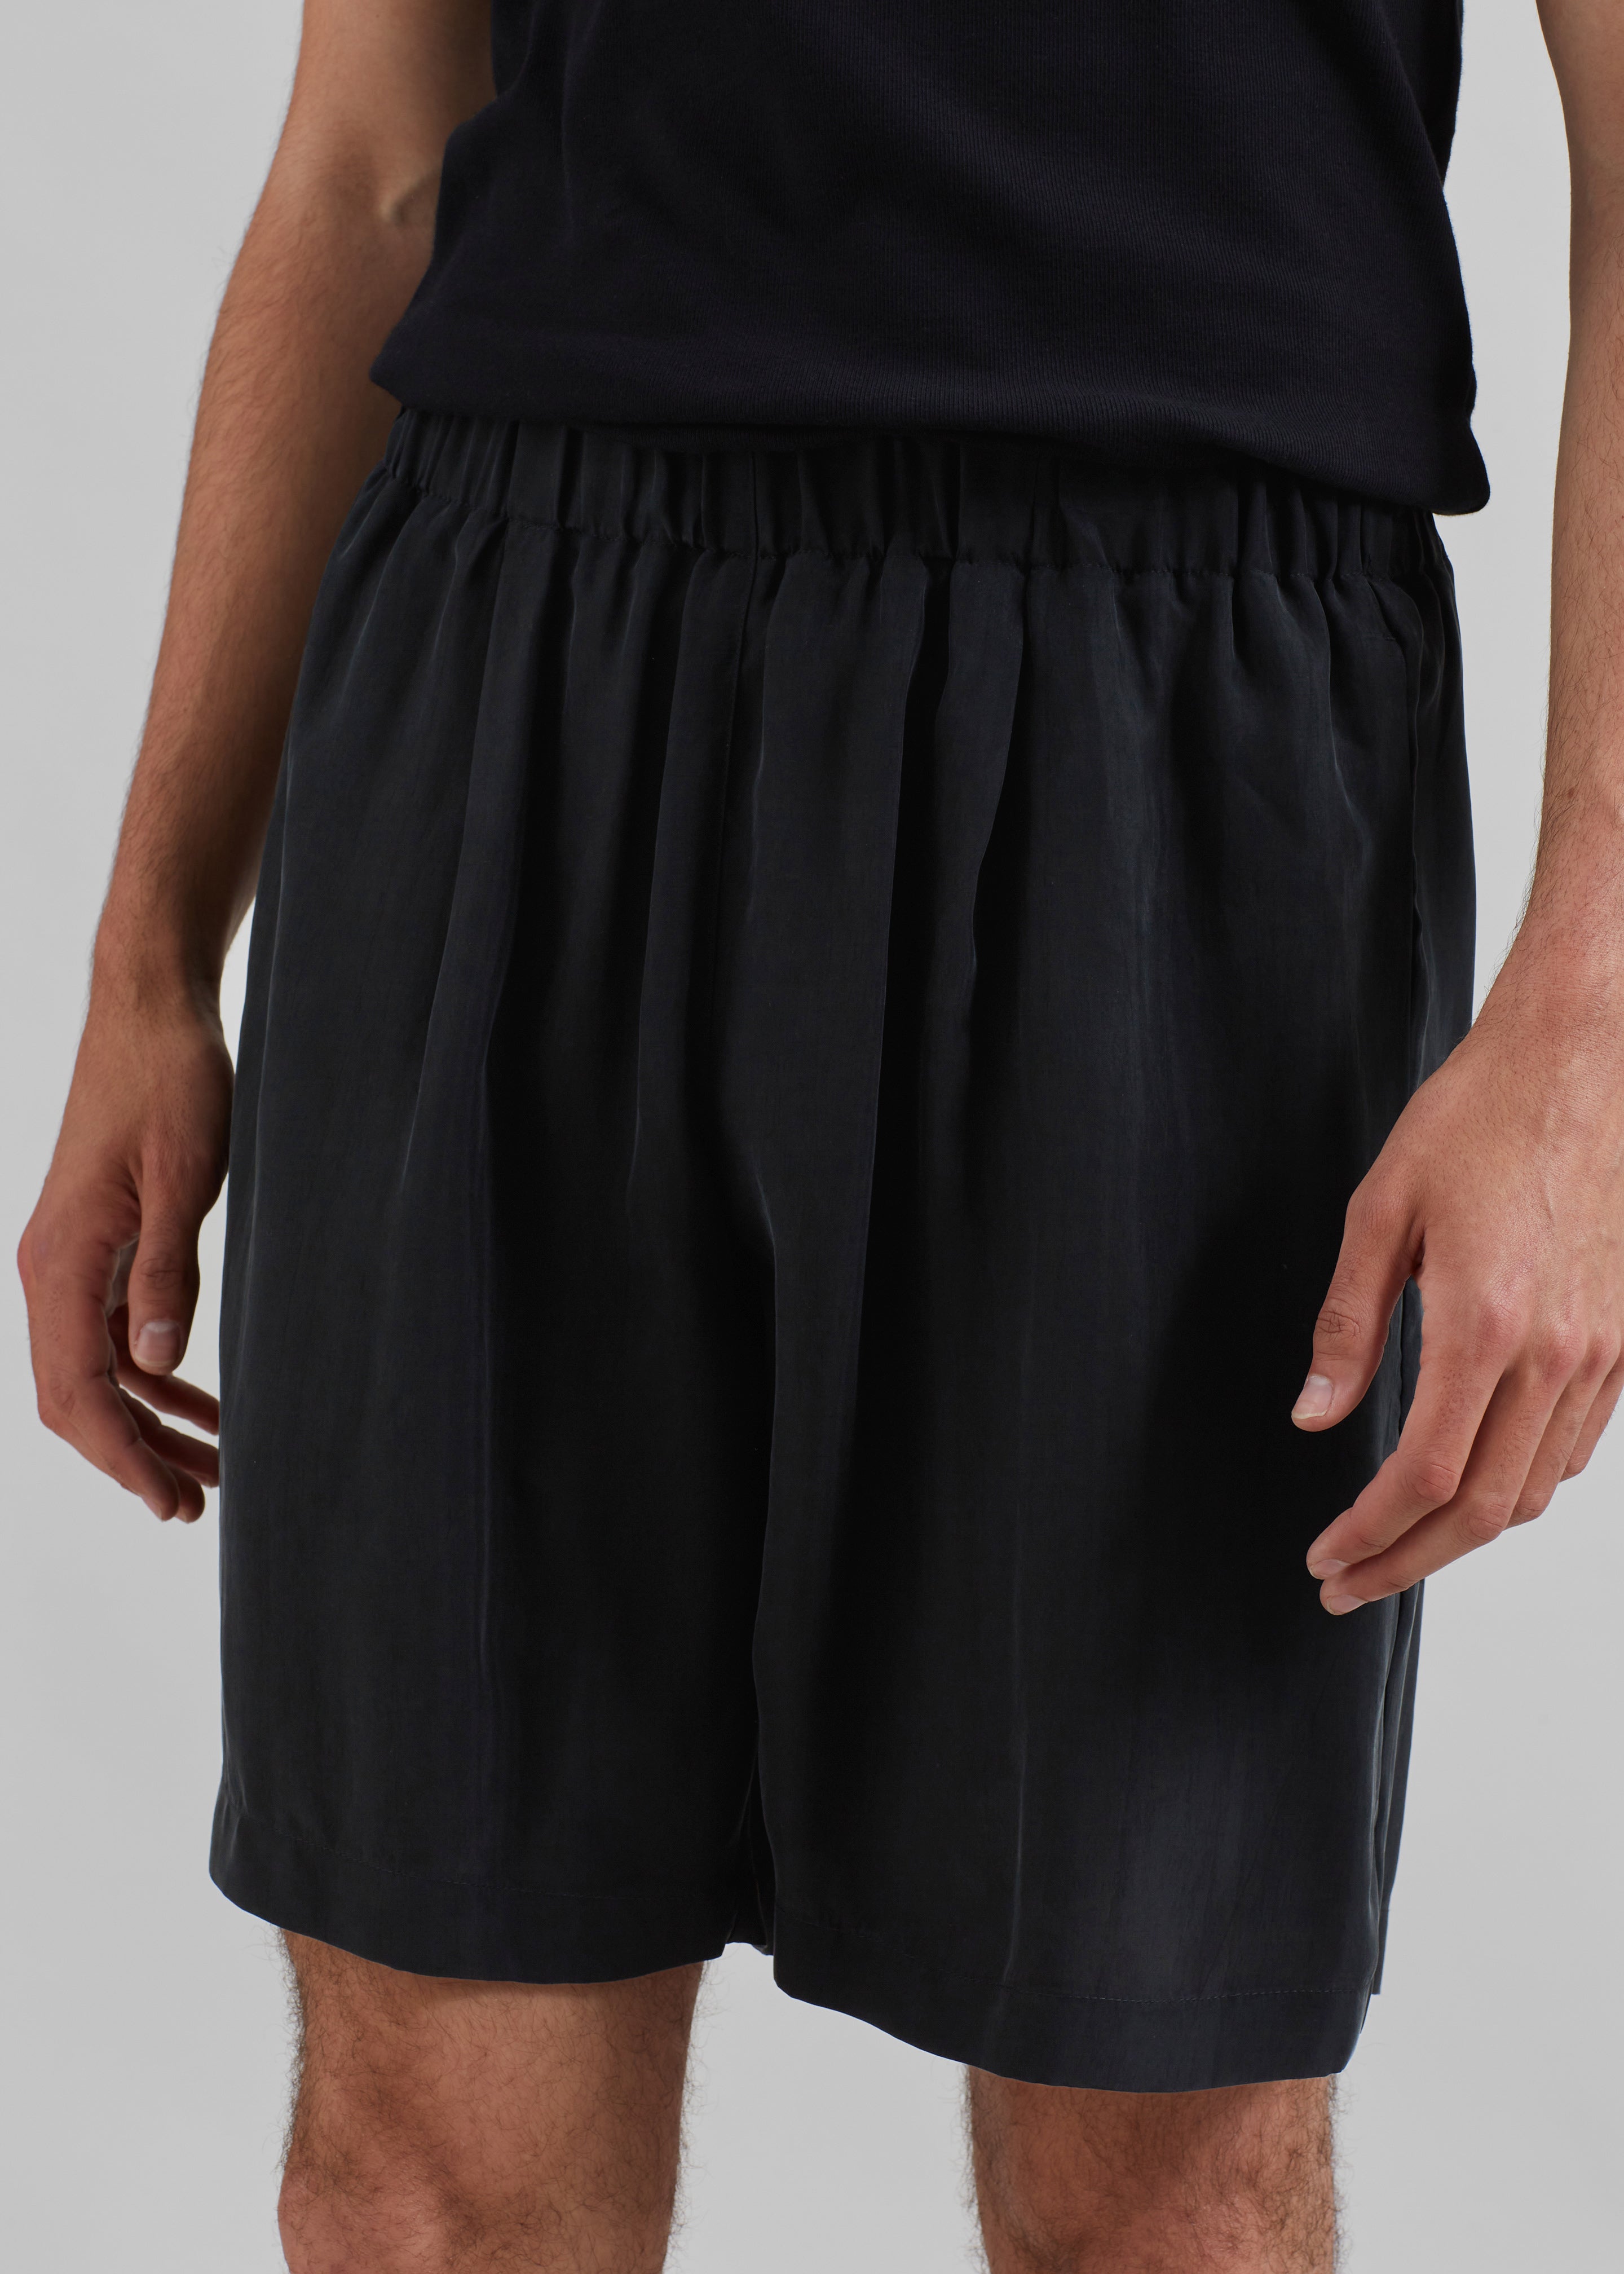 Leland Silky Boxer Shorts - Black - 3